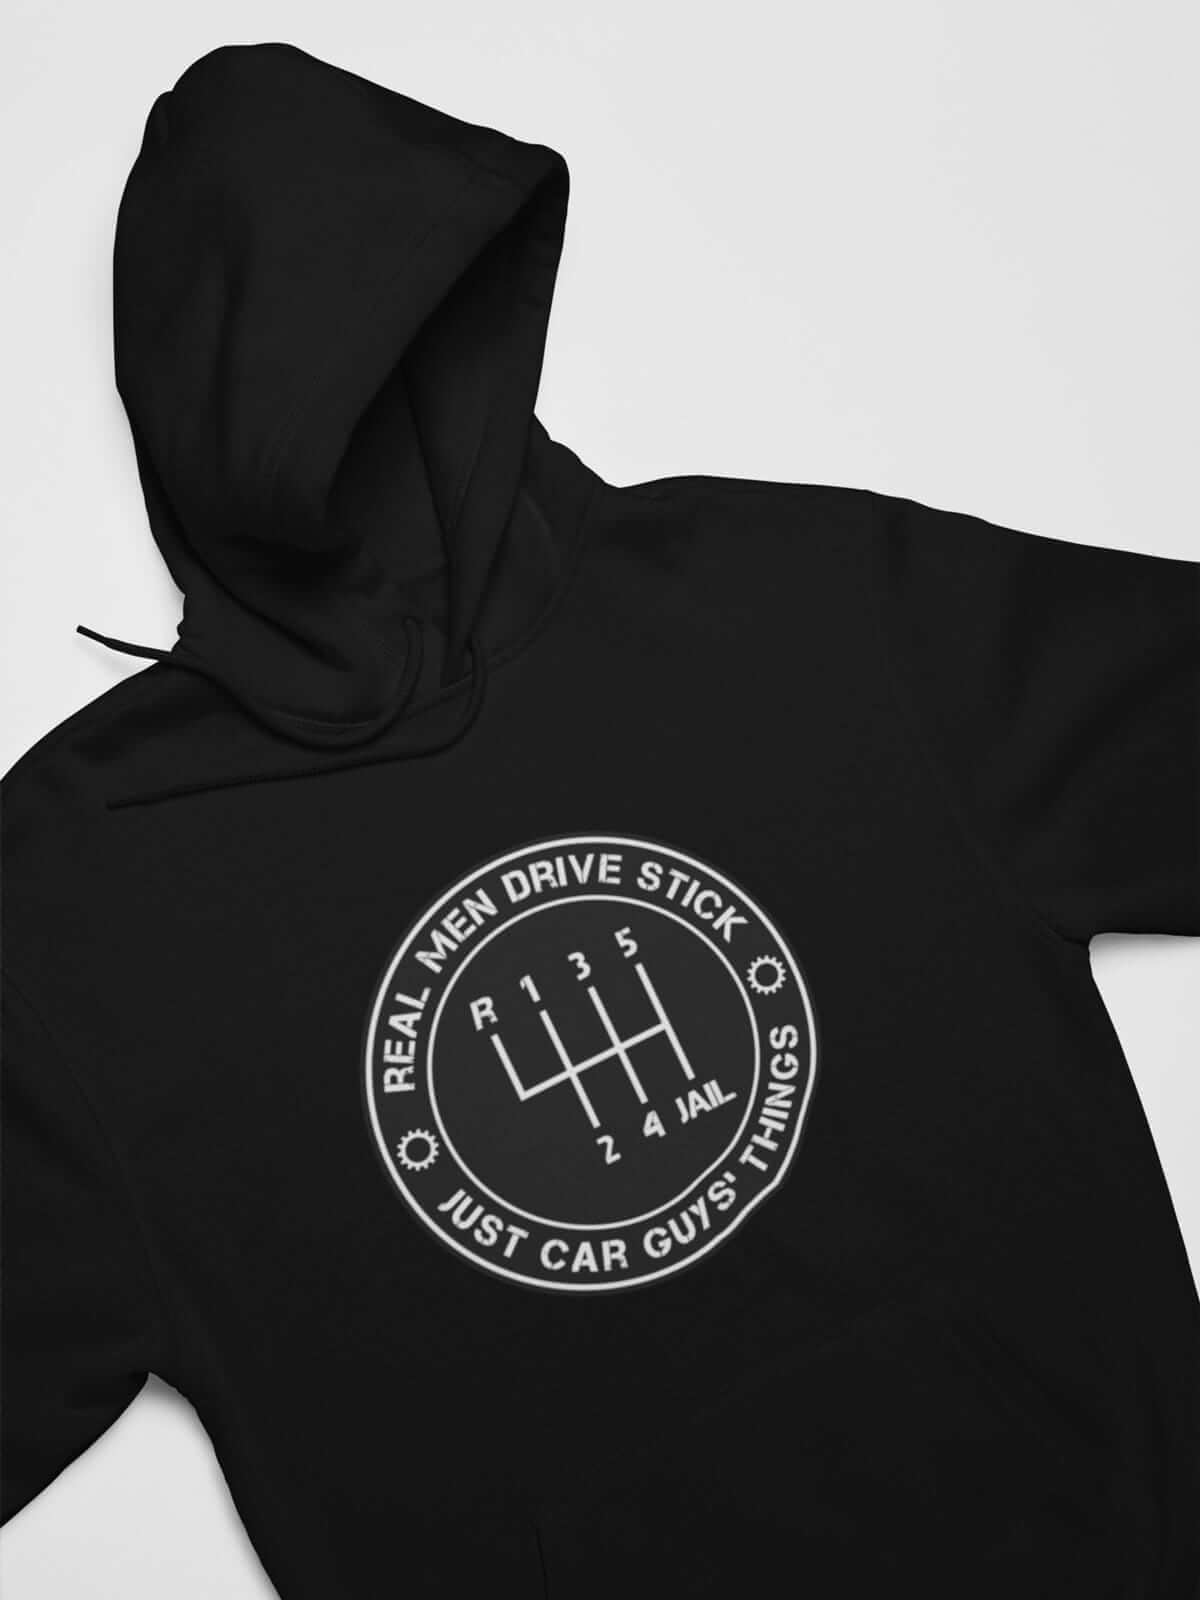 real-men-drive-stick-black-car-hoodie_-save-the-manuals-hooded-sweatshirt_-car-fans_-car-guys_-car-lovers_-car-enthusiast.jpg